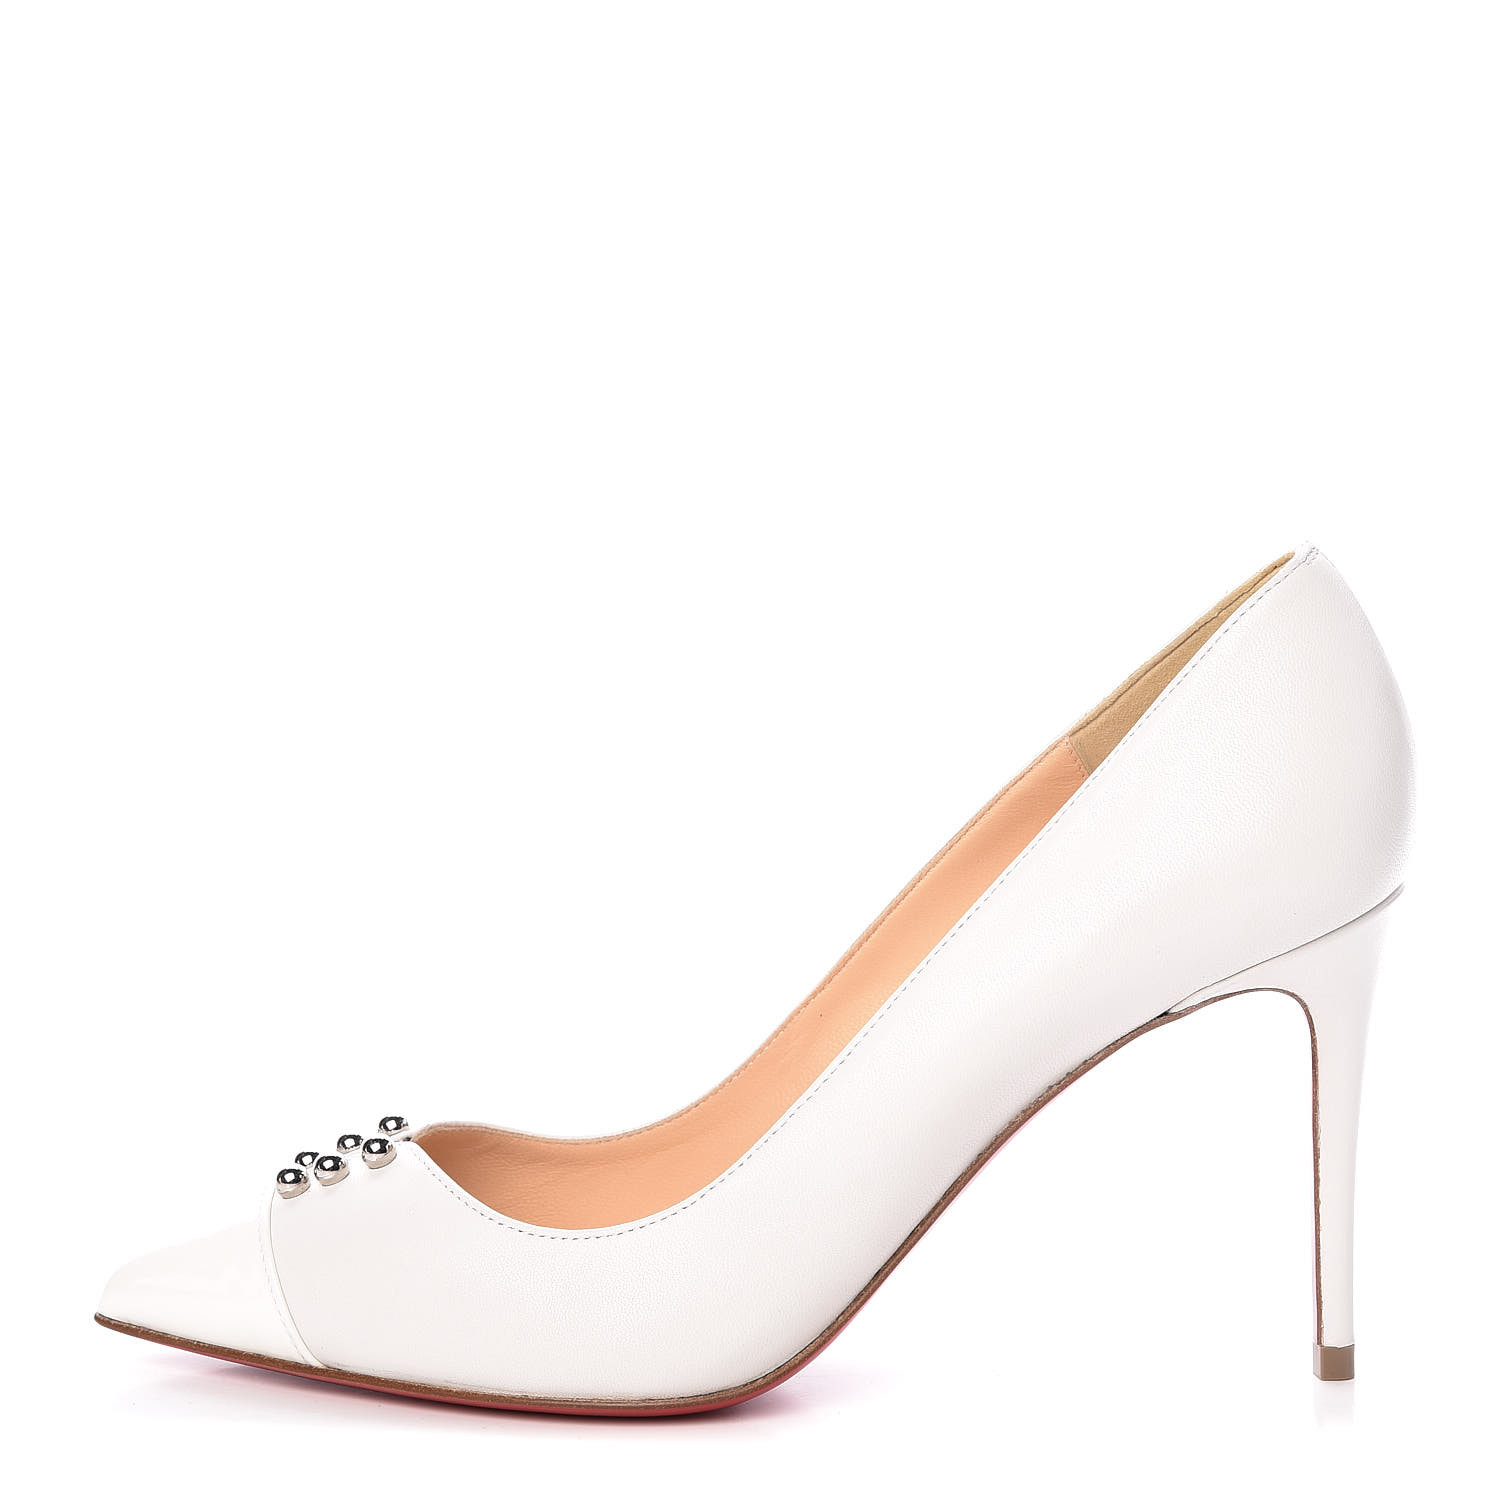 louboutin white studded heels